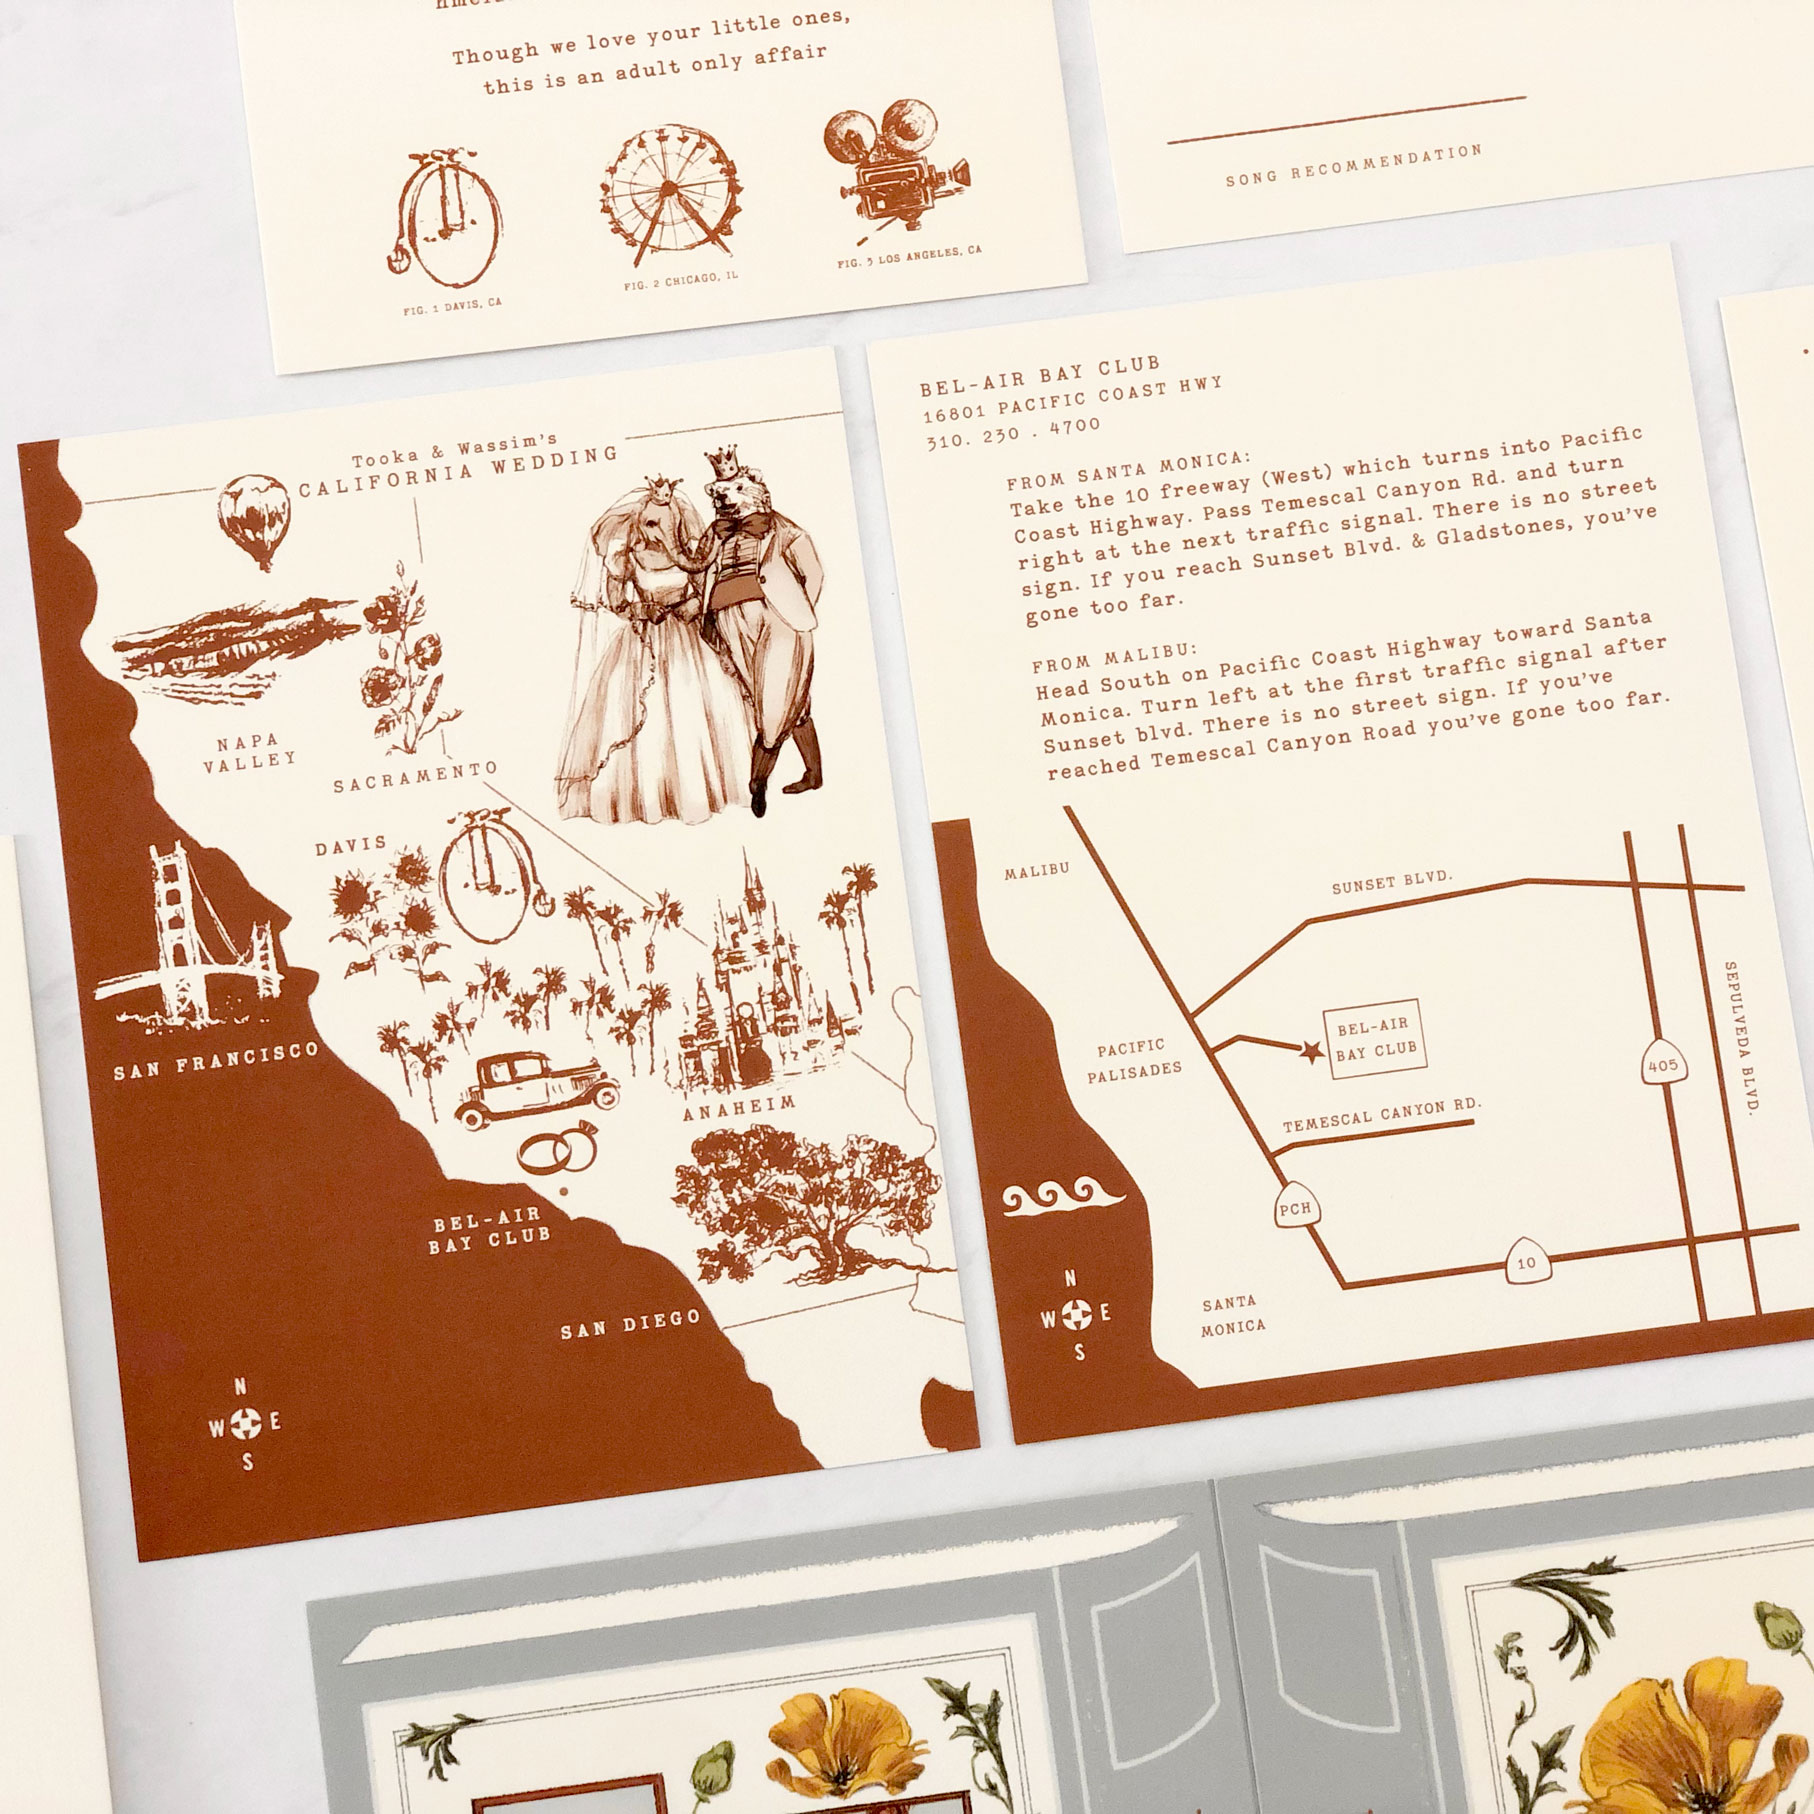 Custom wedding map: A California map and a Bel-Air Bay Club map.